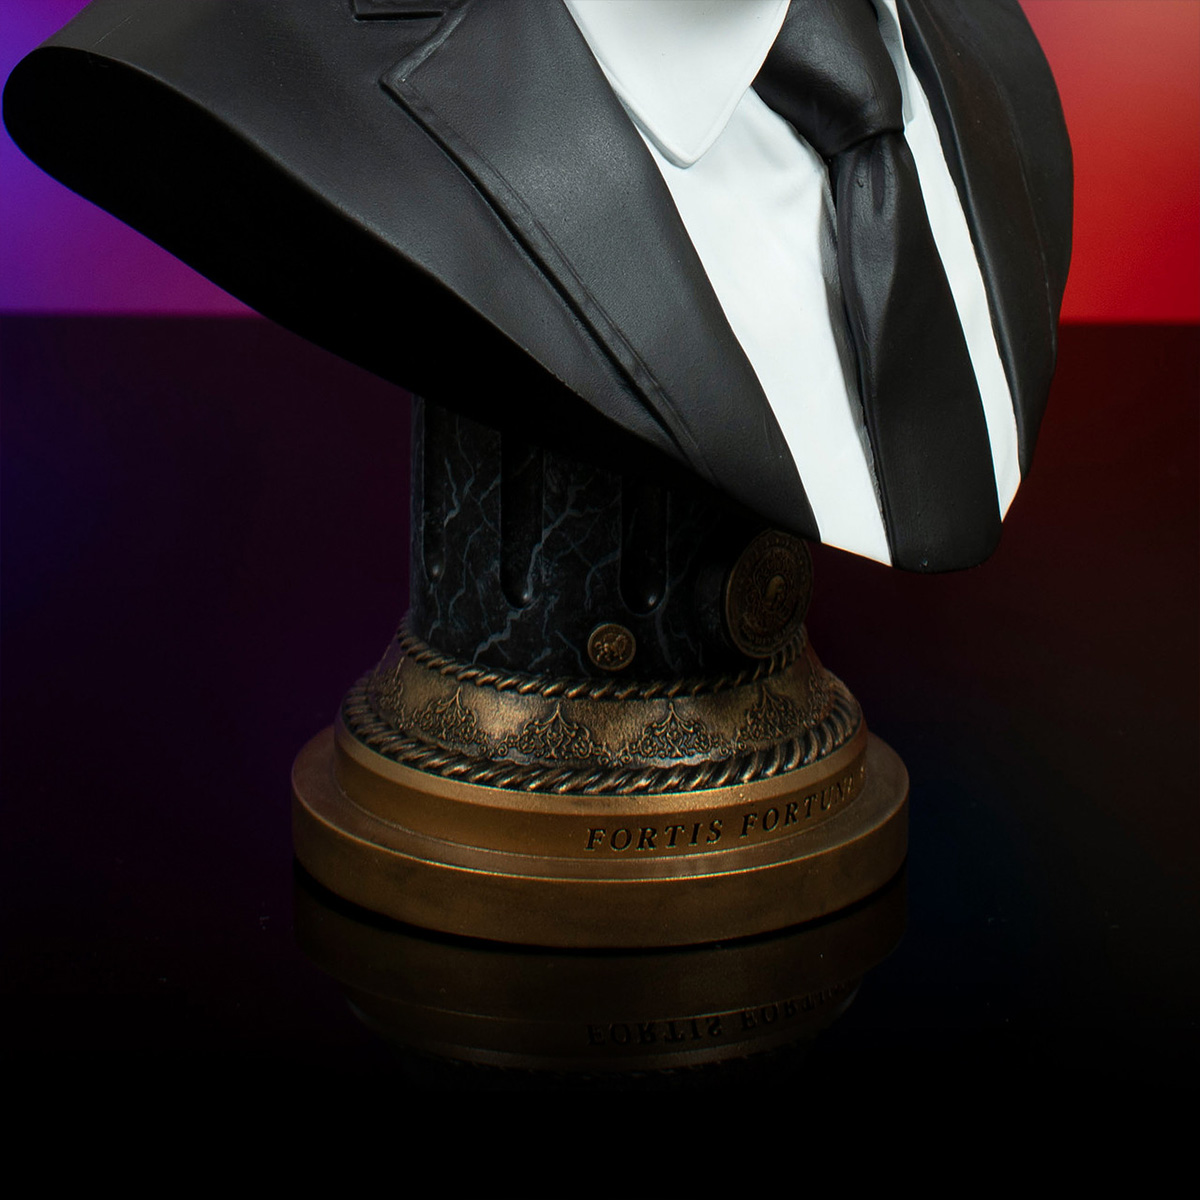 Busto John Wick Legends in 3D (Um Novo Dia para Matar)